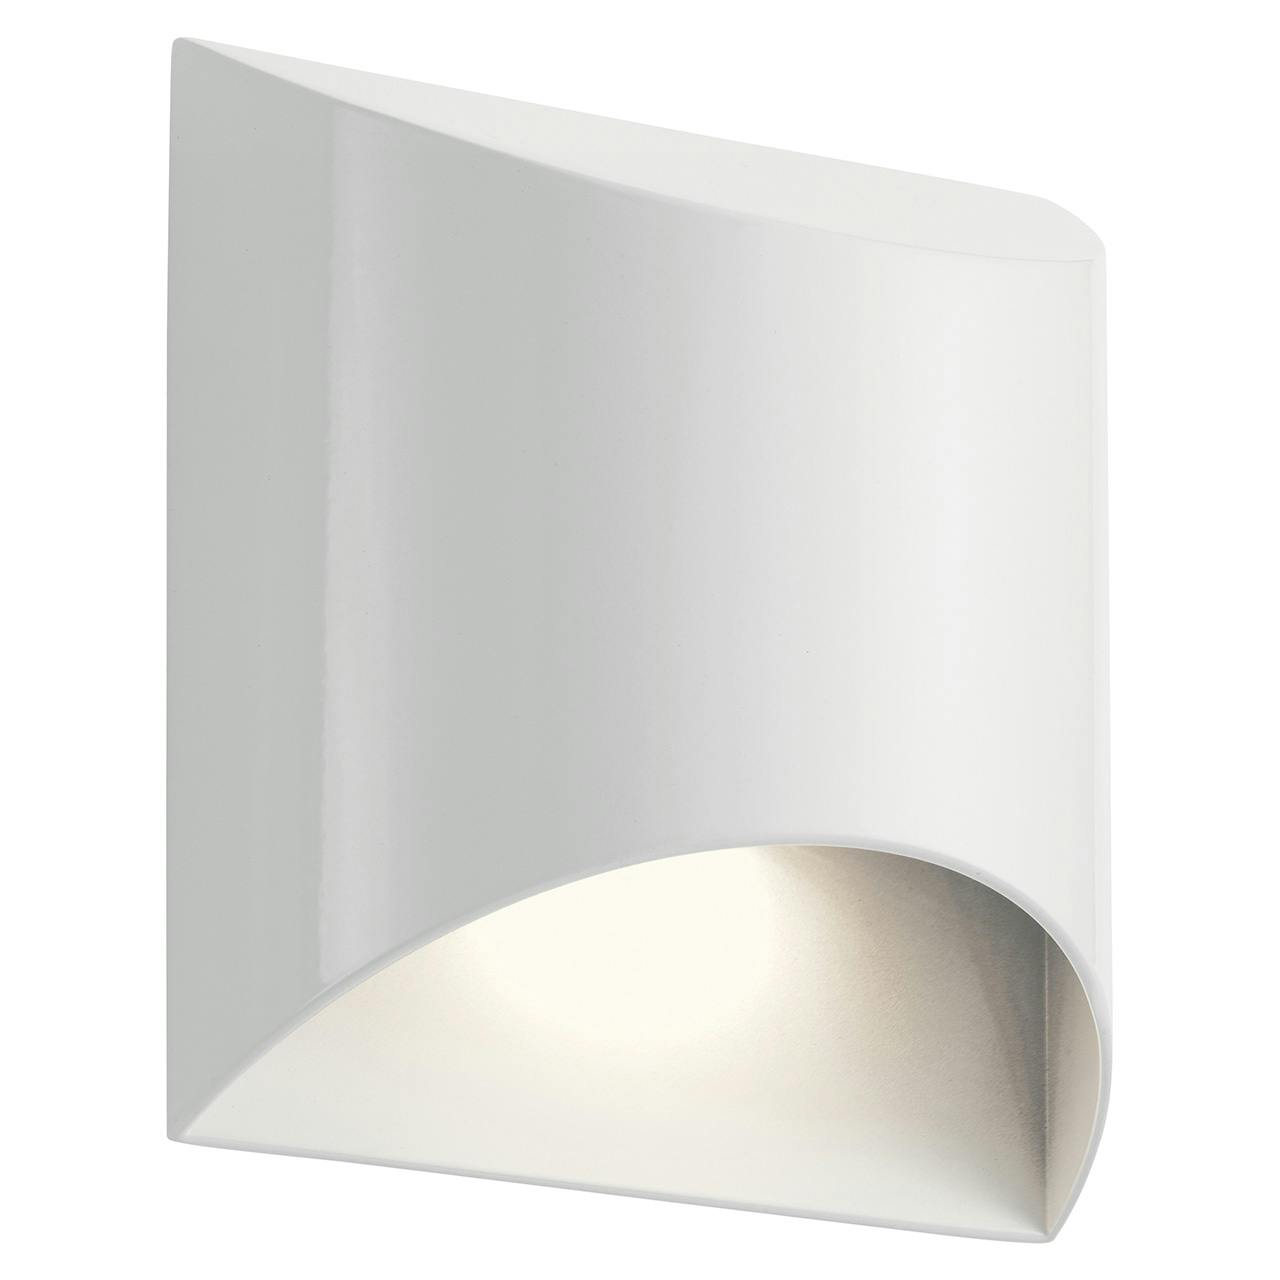 Wesley 1 Light LED Wall Light White on a white background